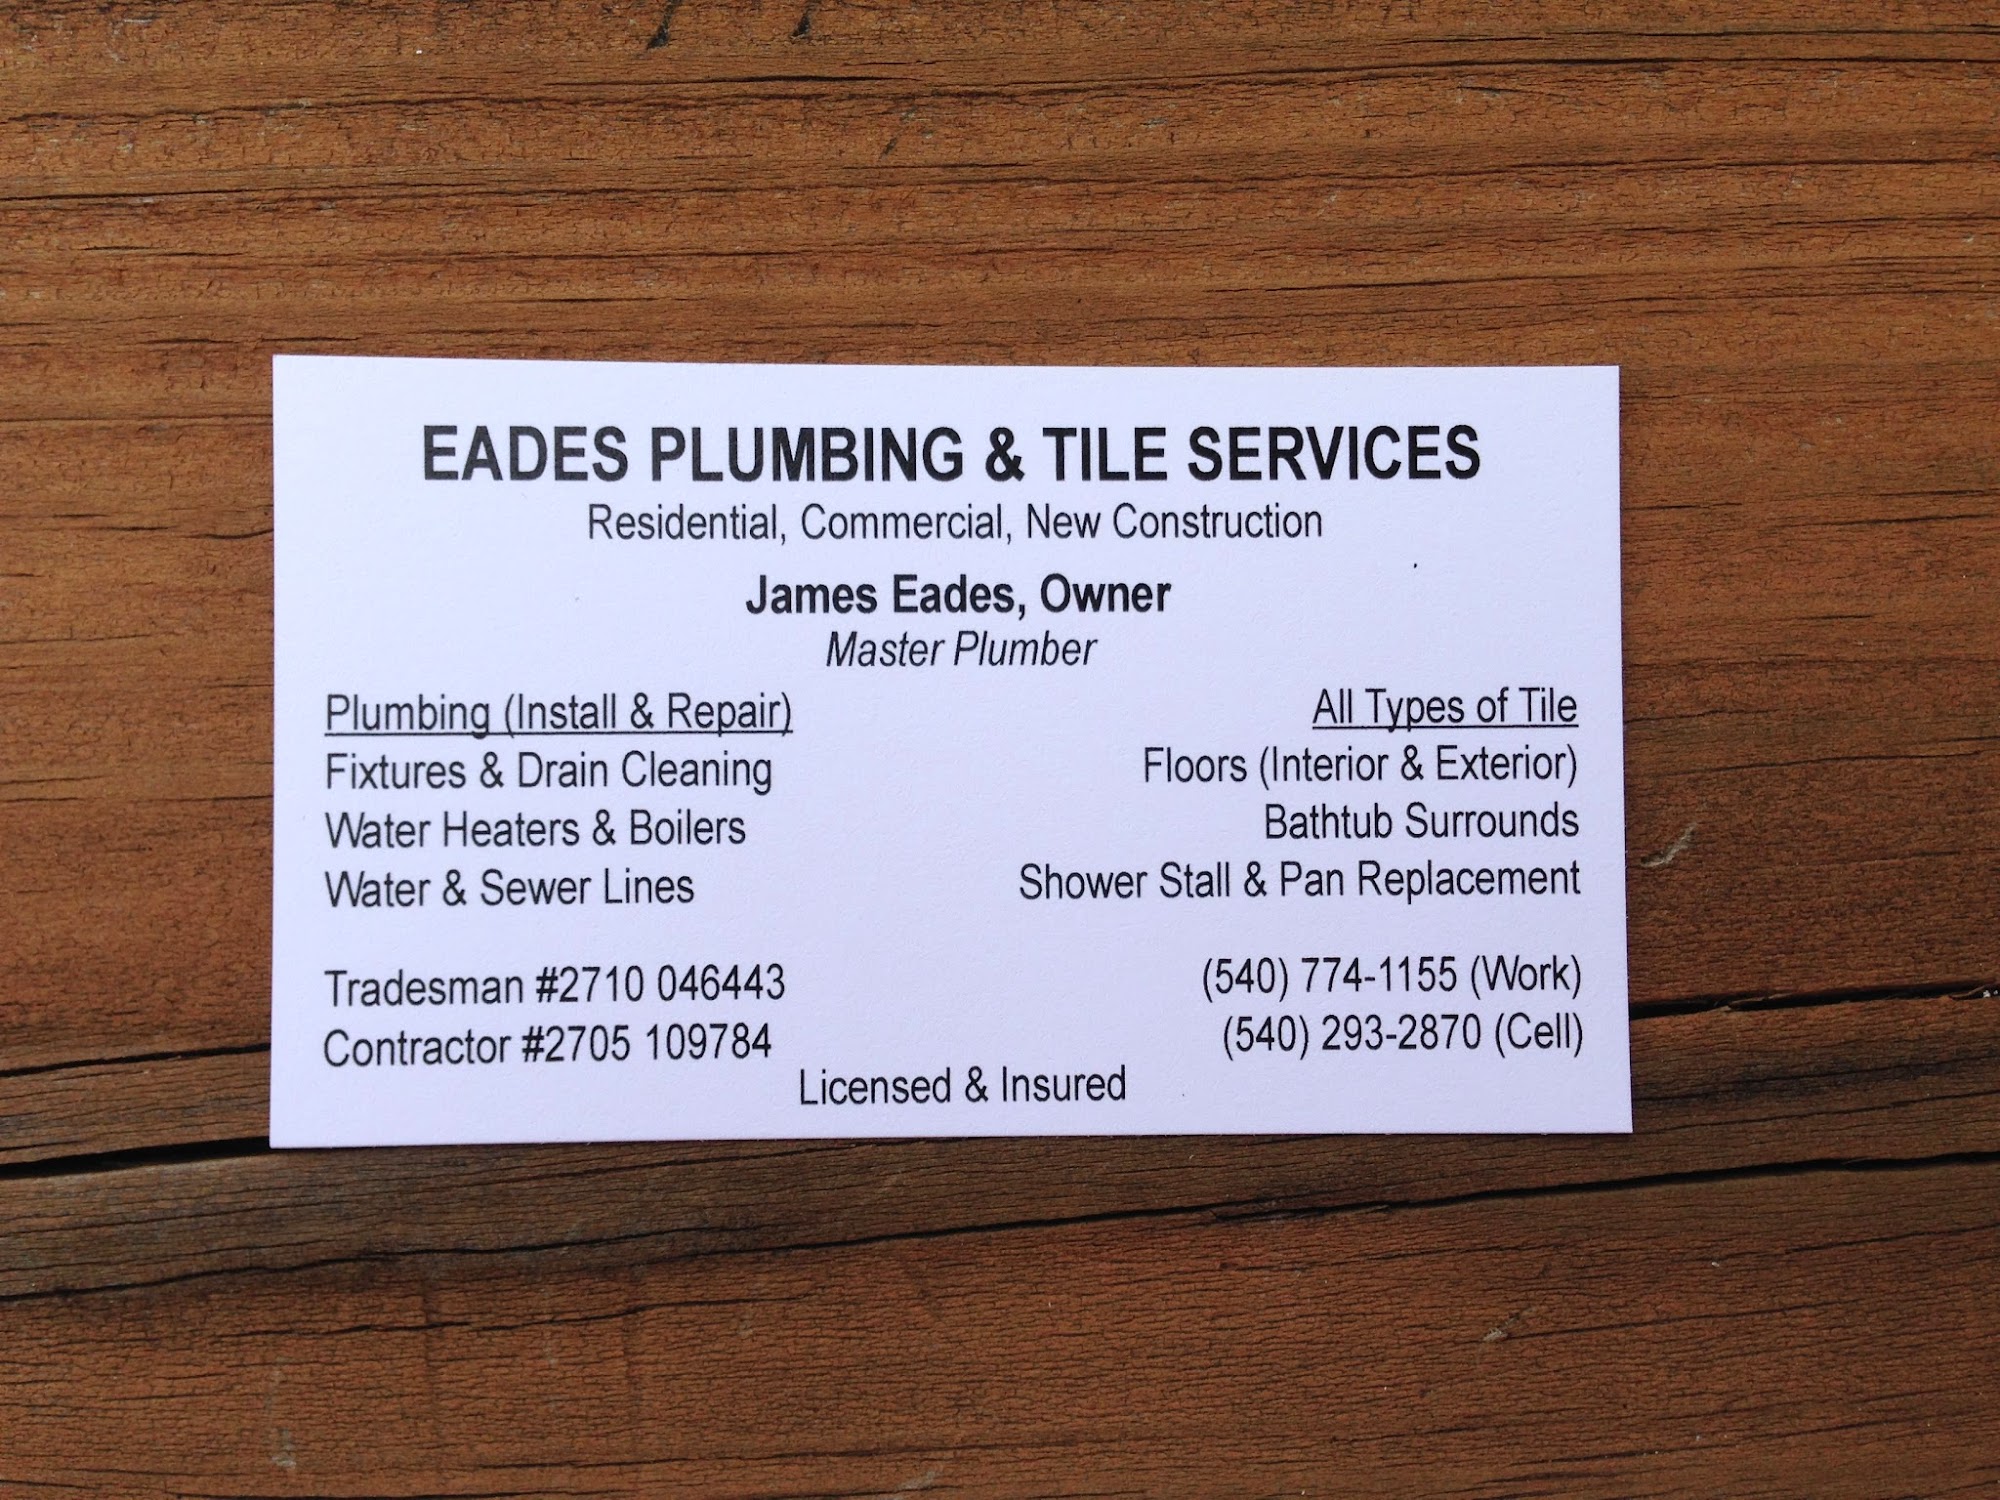 Eades Plumbing & Tile Services